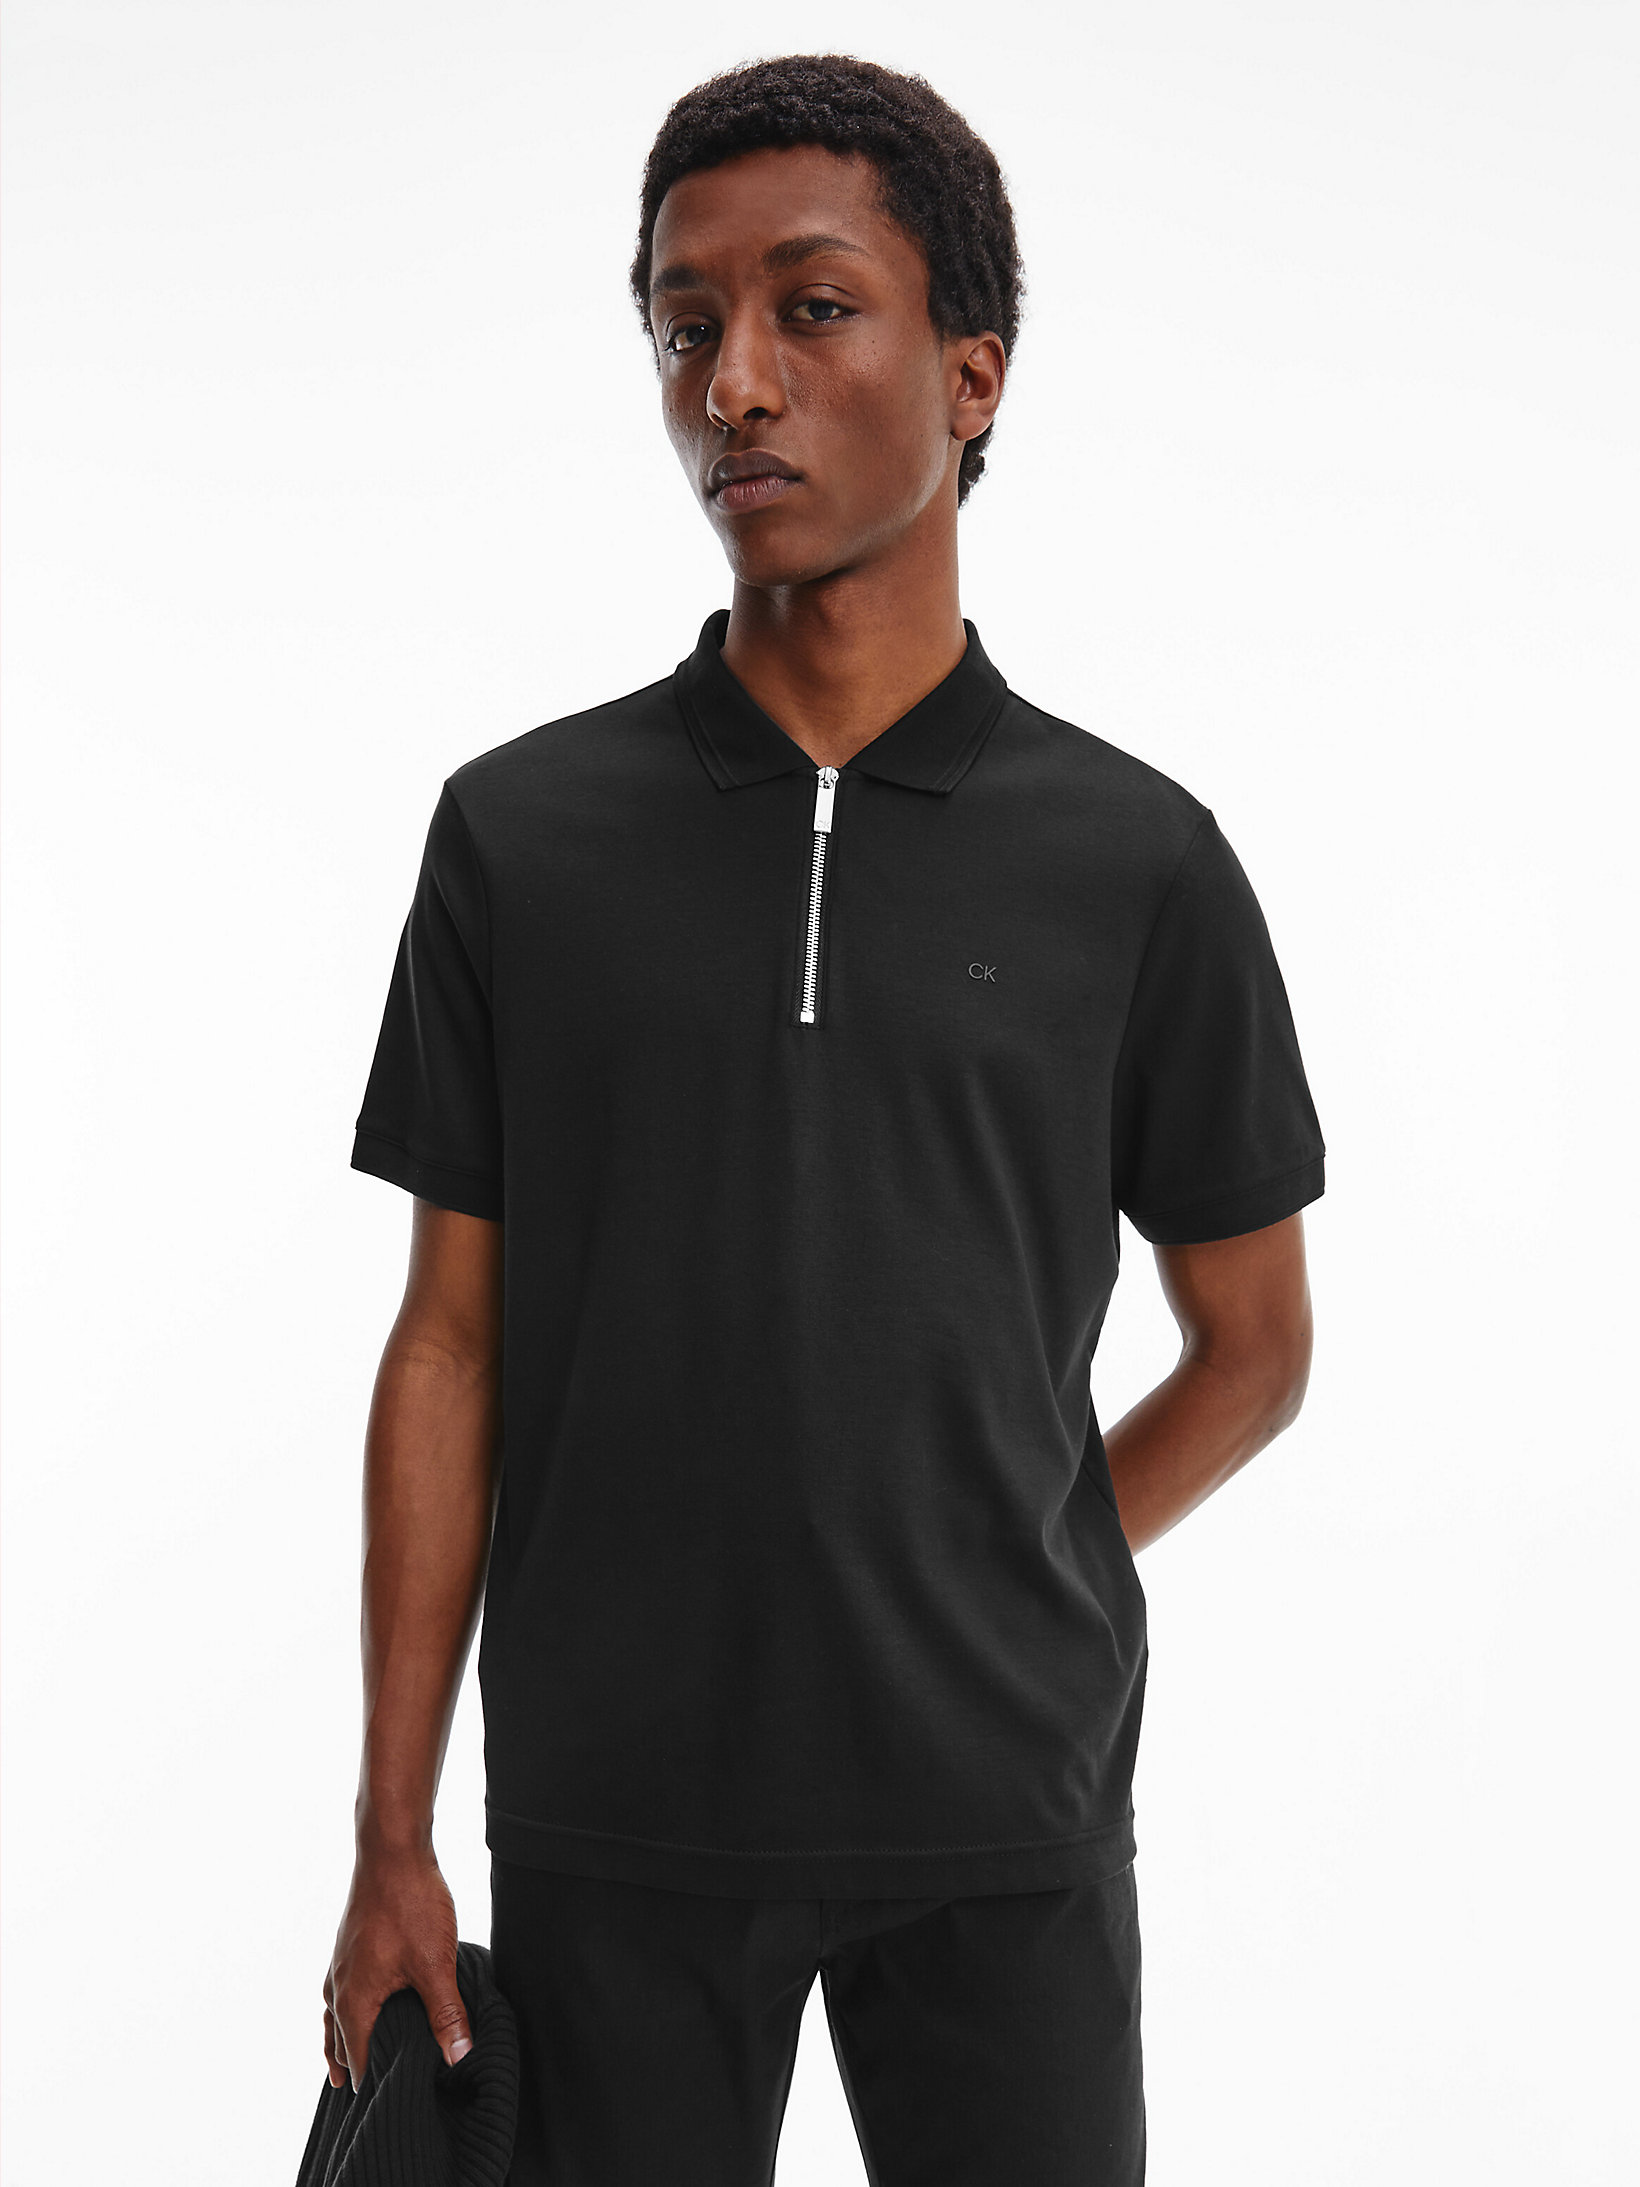 mens zip neck polo shirt, huge discount Save 50% - vaguys111.com